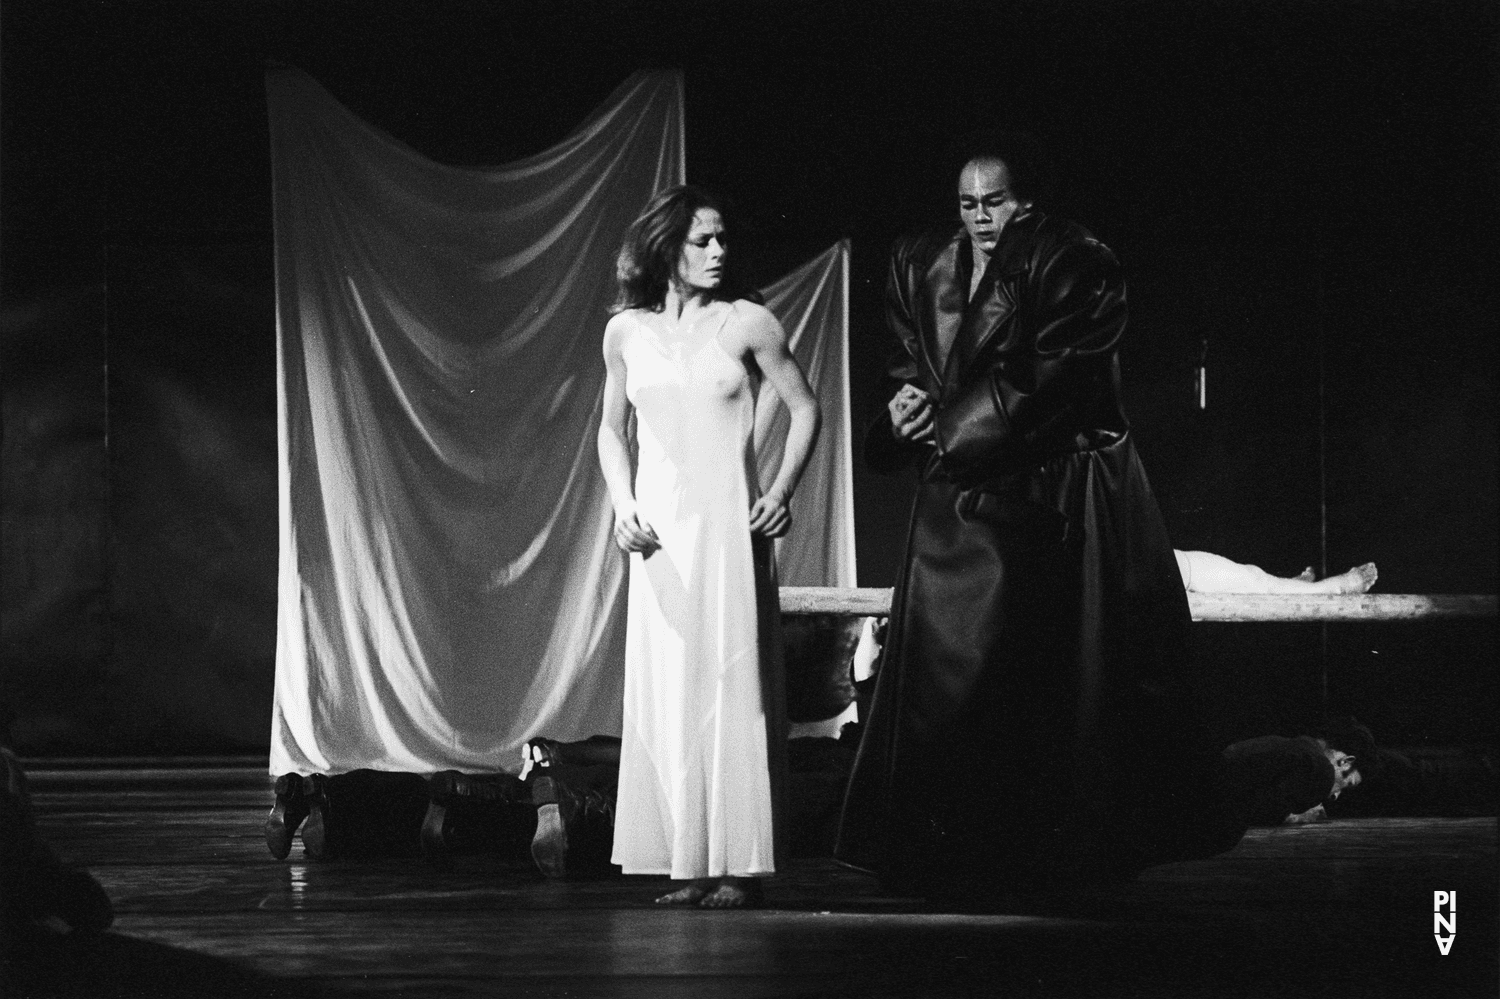 Malou Airaudo et Carlos Orta dans « Iphigenie auf Tauris » de Pina Bausch avec Tanztheater Wuppertal à l'Opernhaus Wuppertal (Allemagne), 20 avril 1974